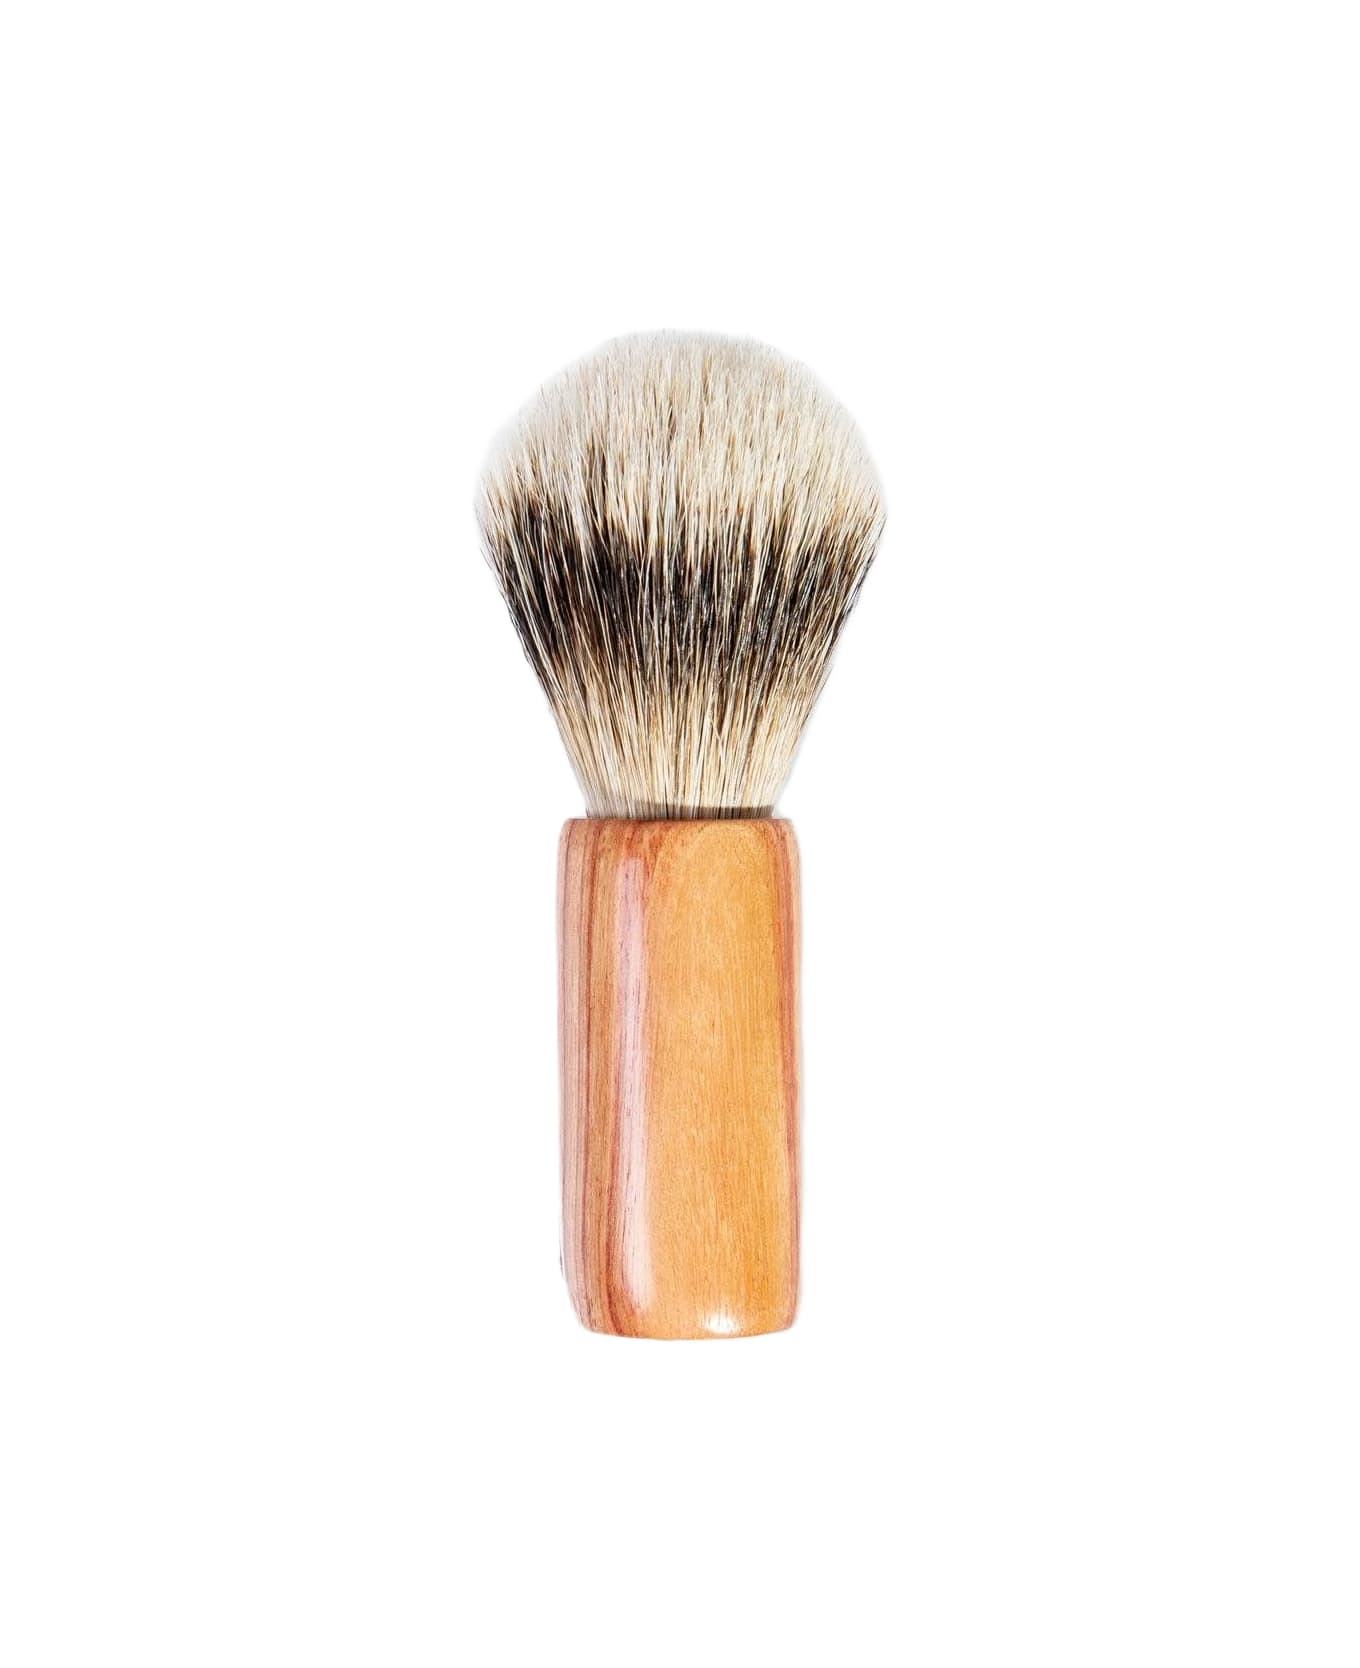 Larusmiani Shaving Brush 'i. Svevo' Beauty - Neutral